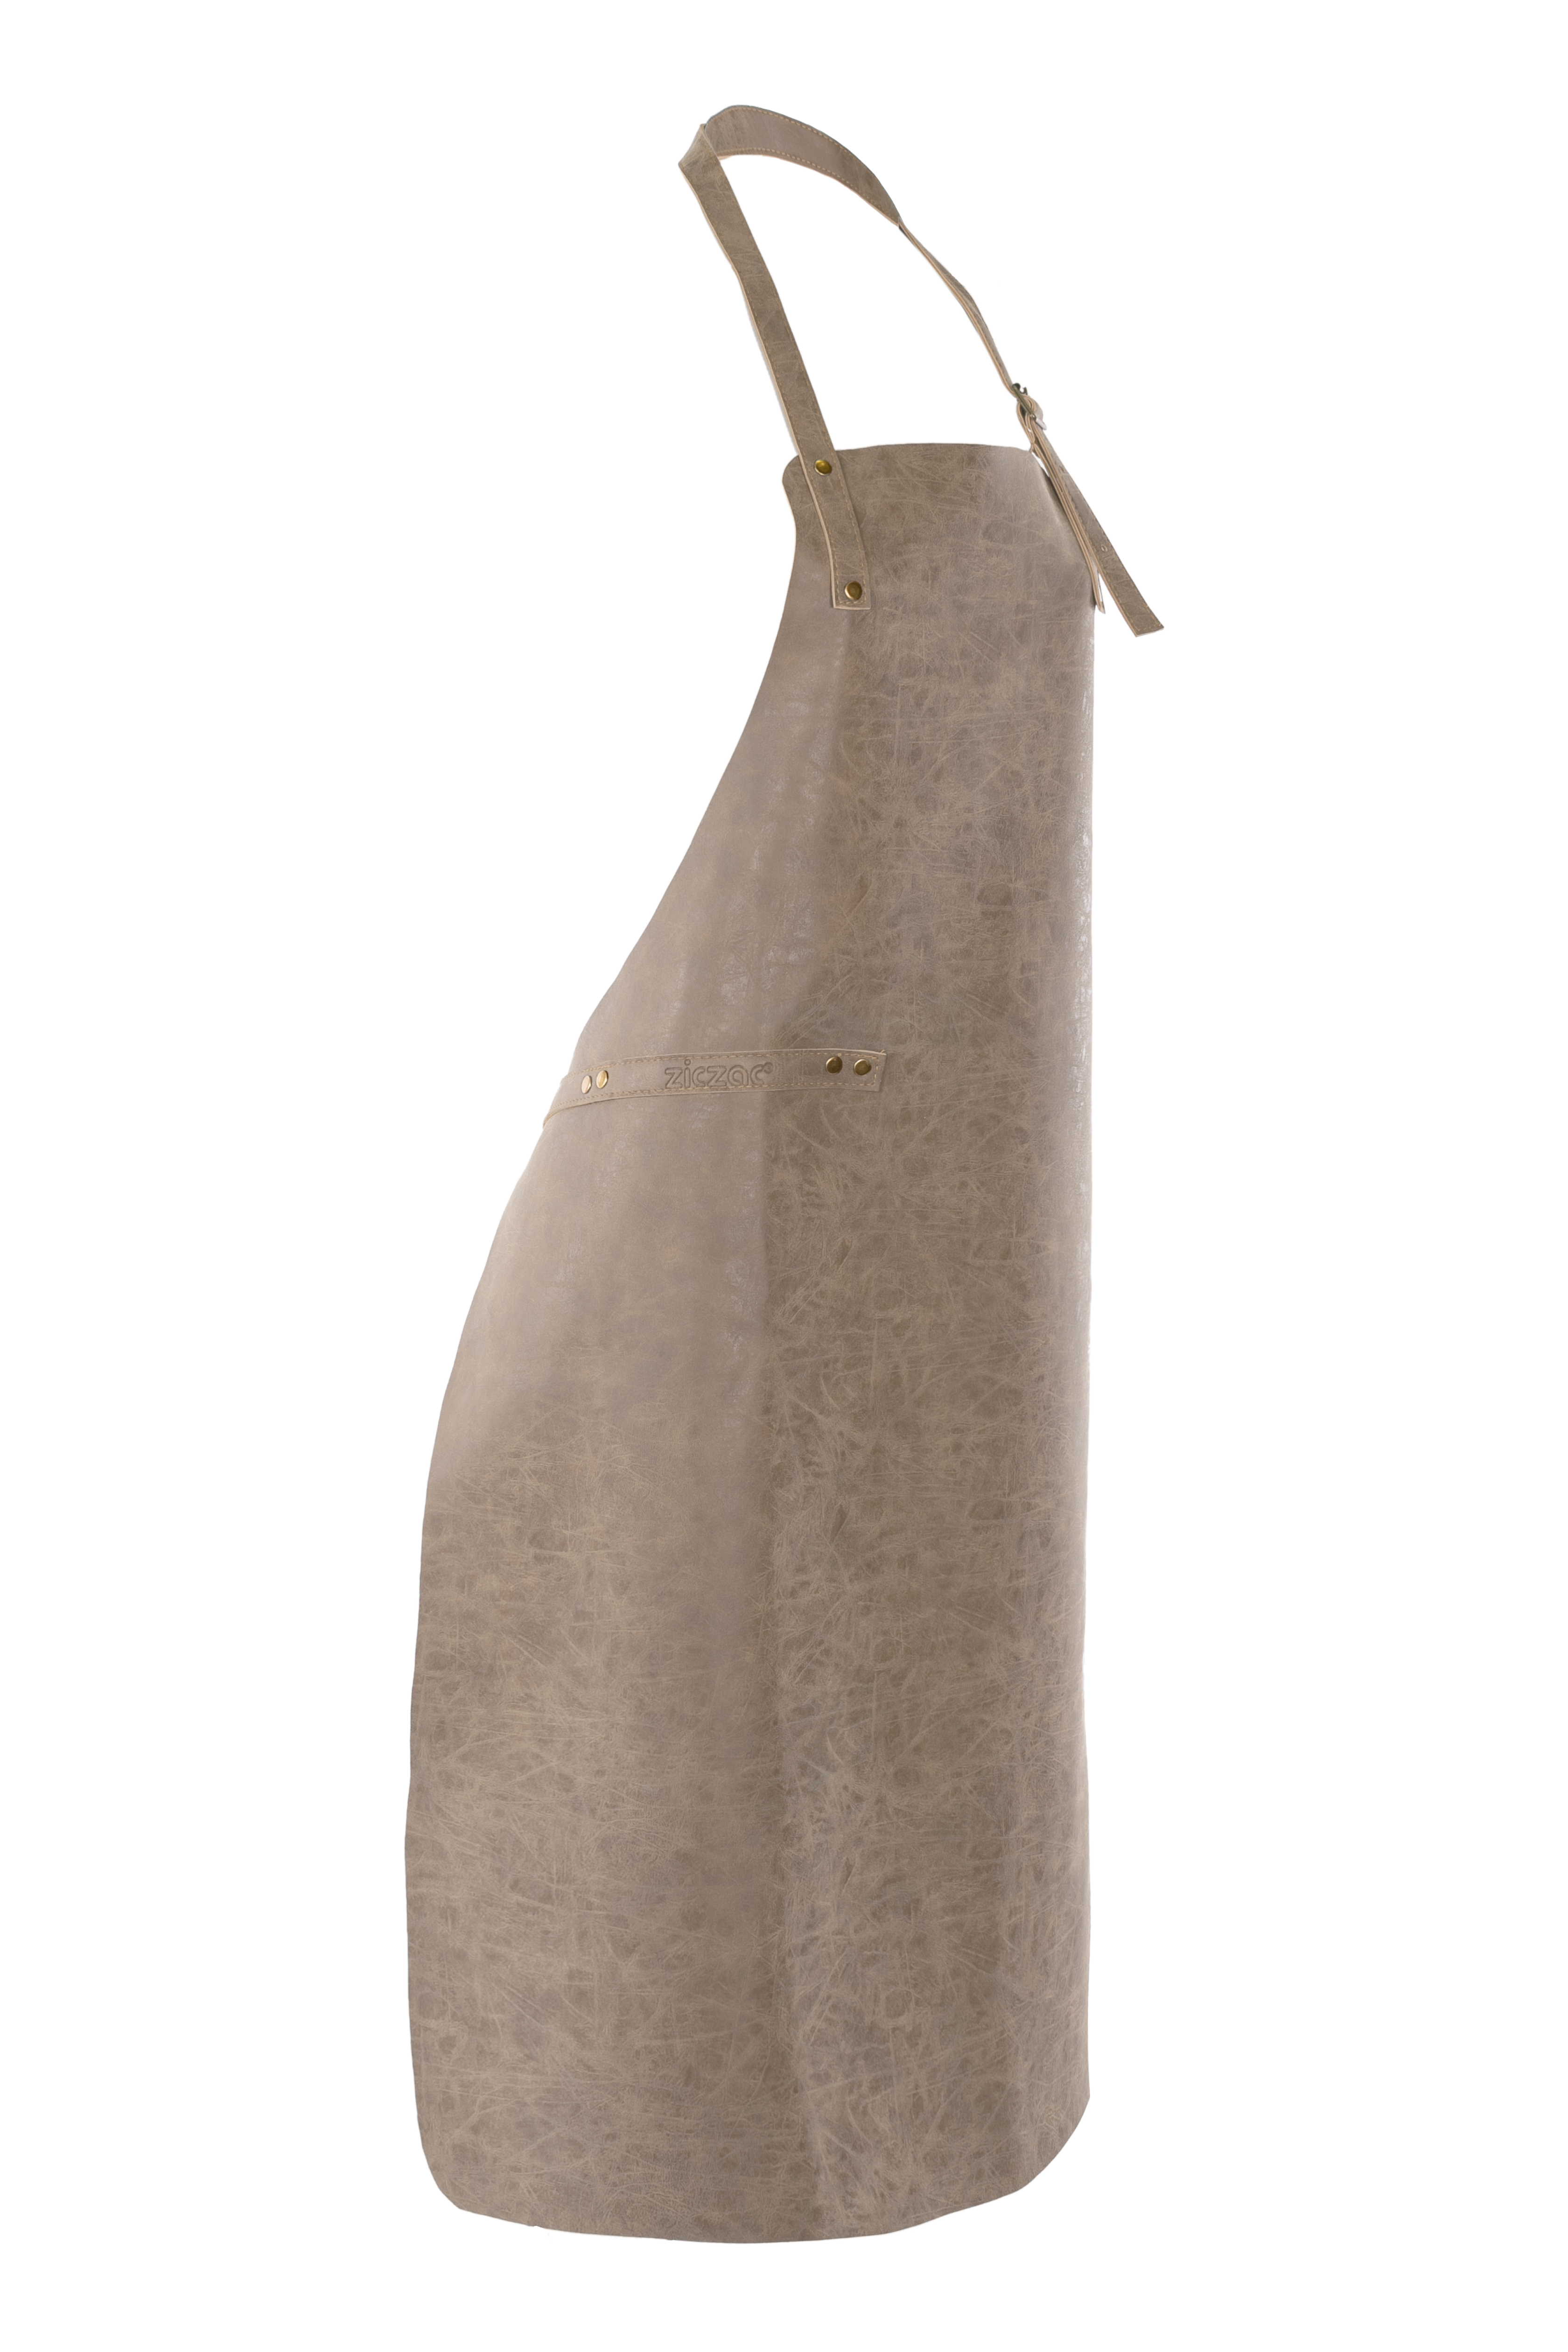 Tablier TRUMAN (Towel loop - no pocket - opt. Accessory bag), 70x90 cm, taupe